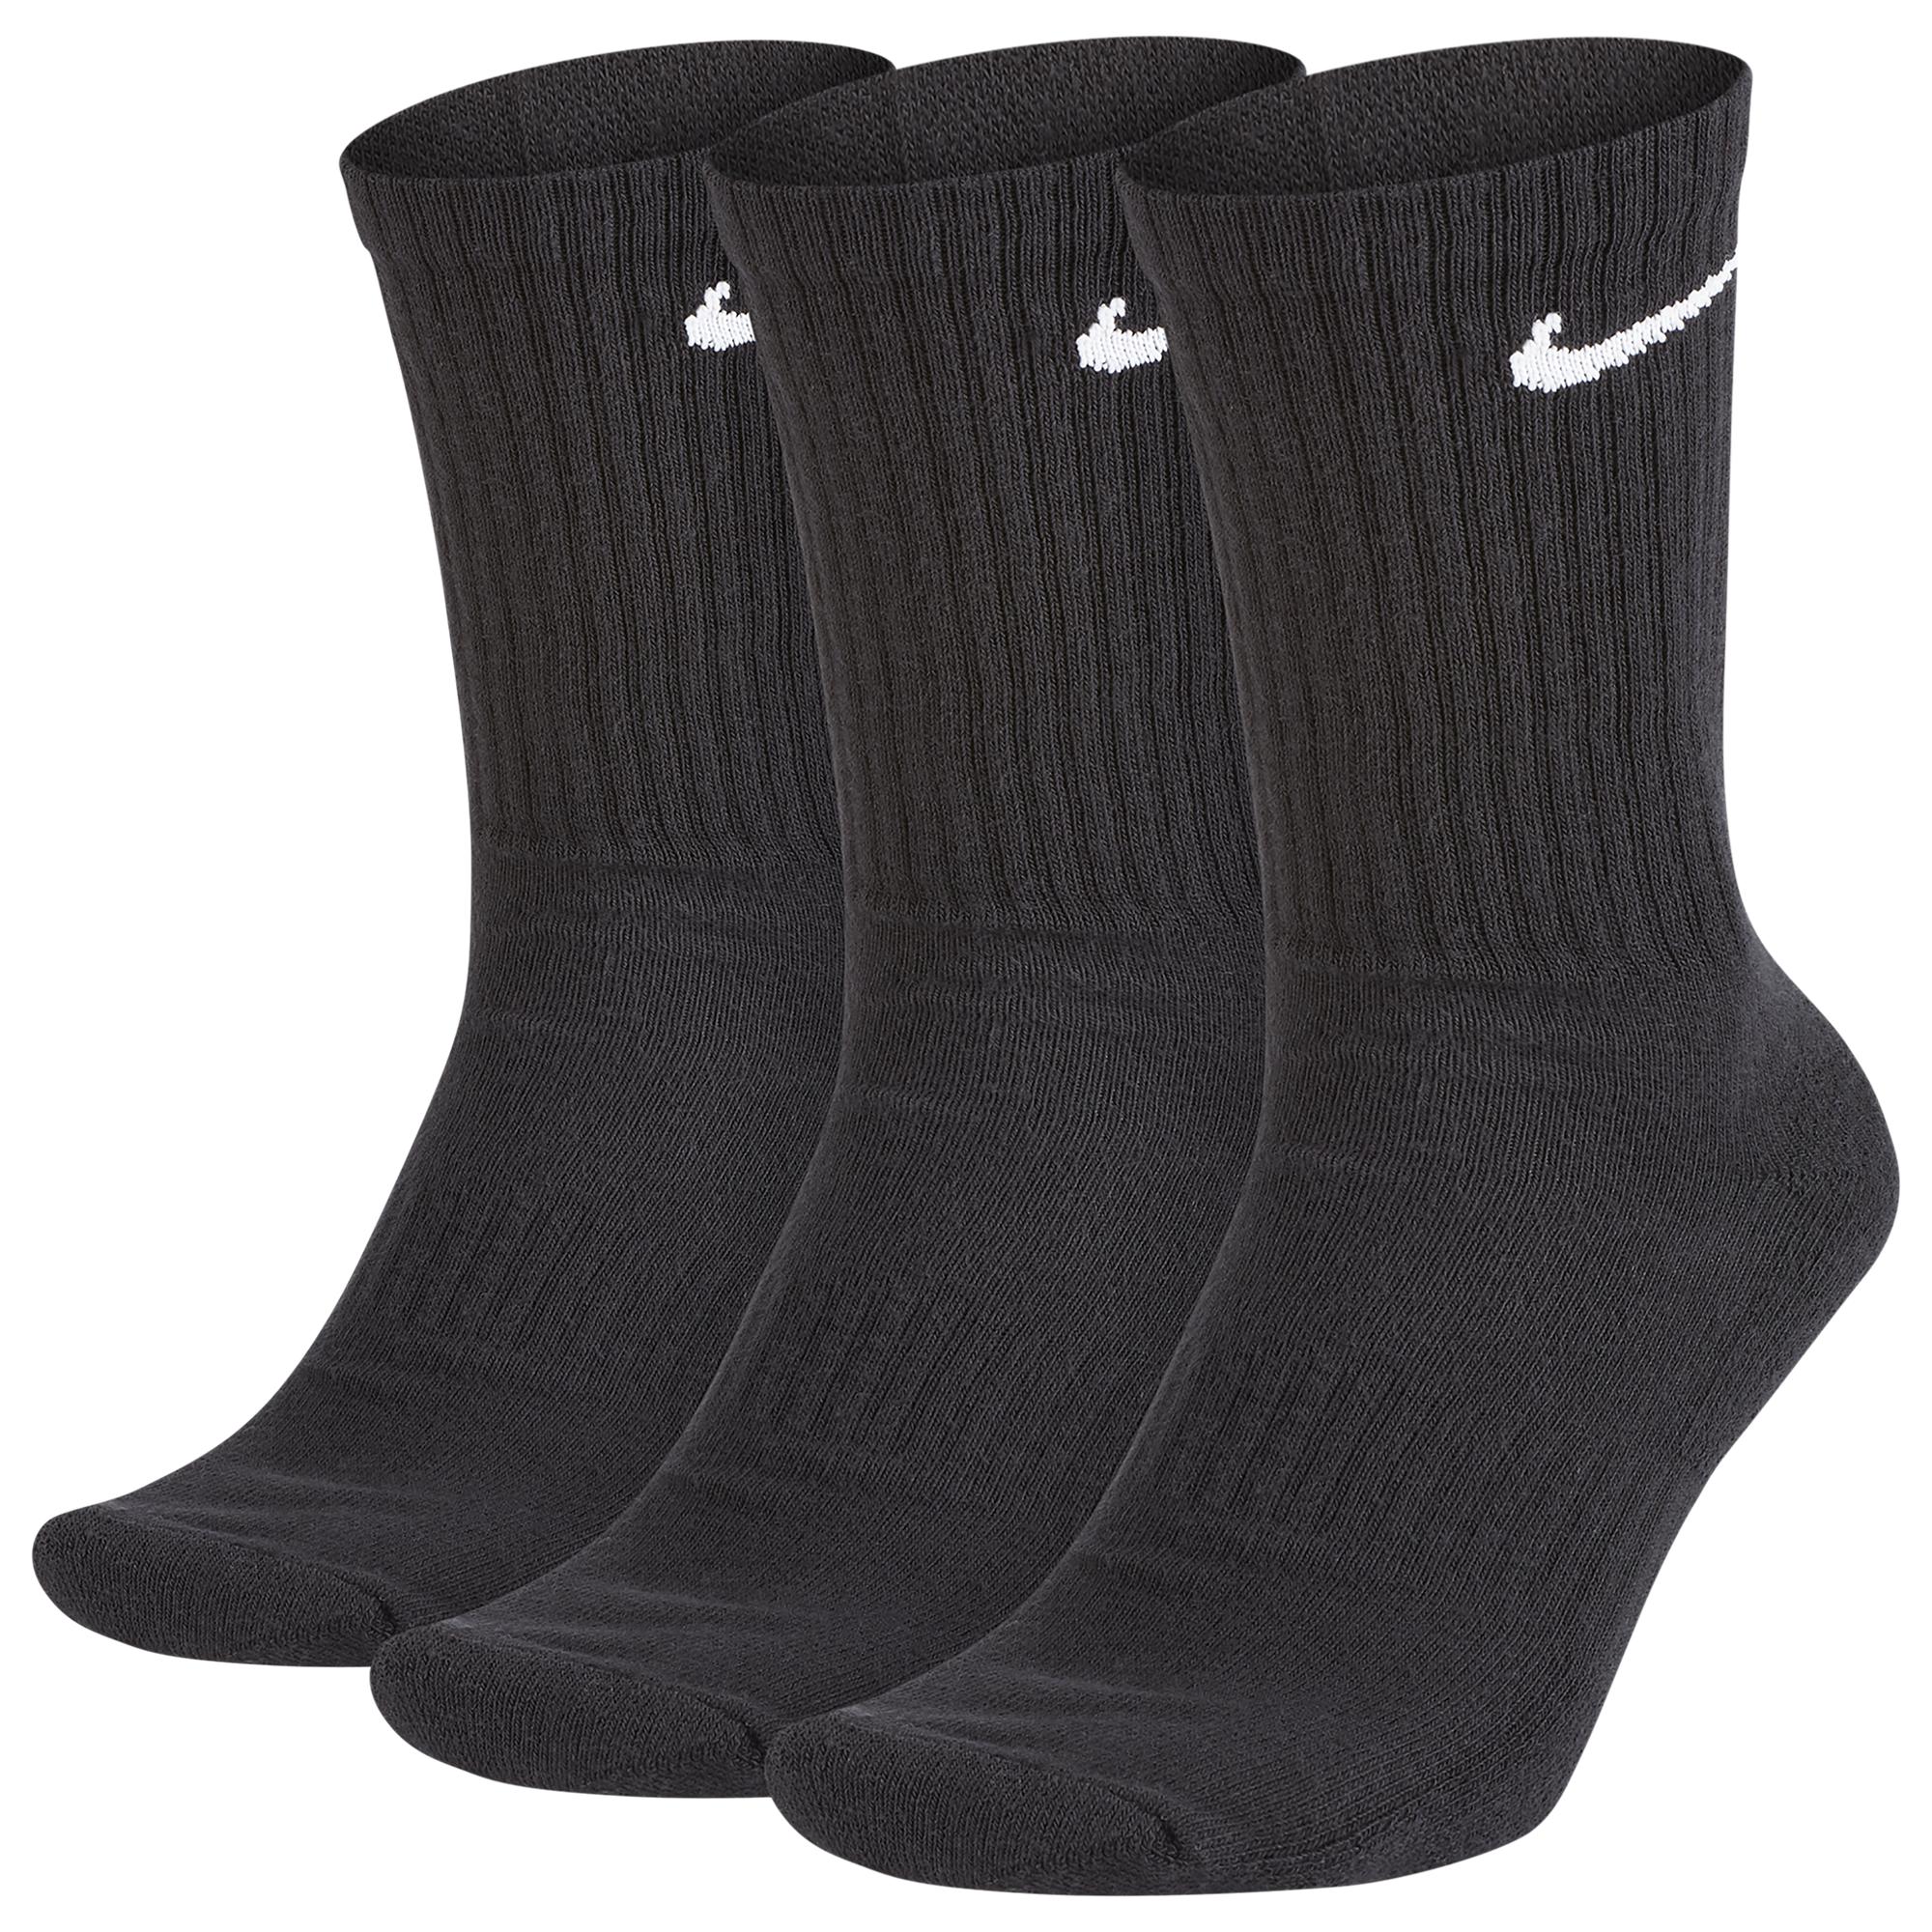 Nike 3 Pack Dri-fit Cotton Crew Socks in Black for Men - Lyst